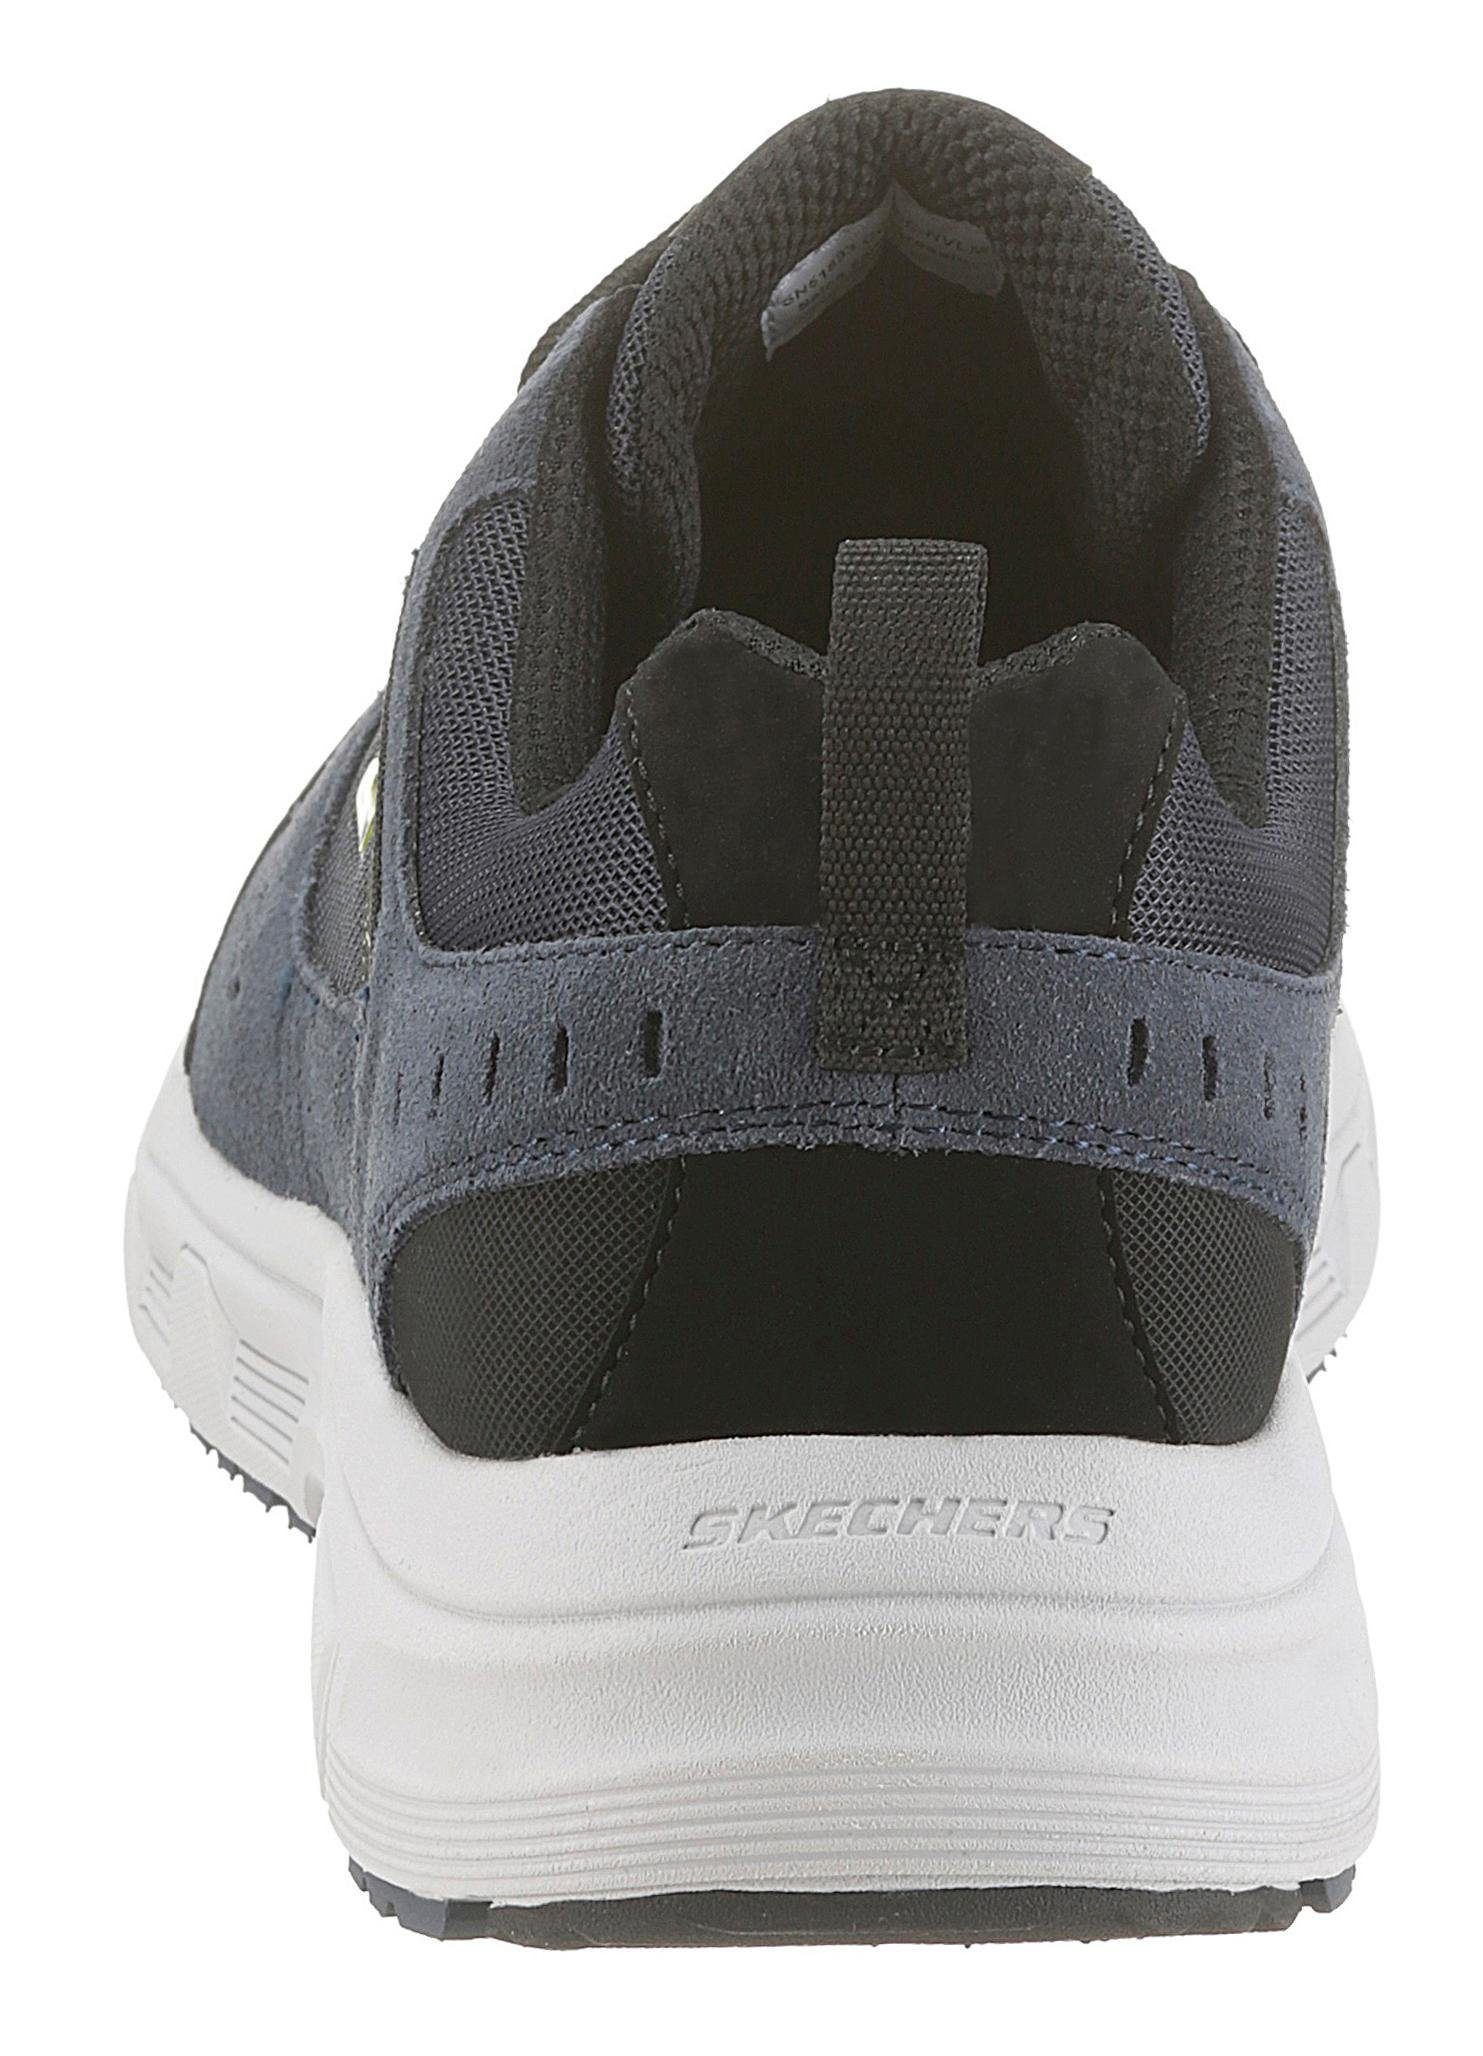 Foam-Ausstattung Skechers Sneaker Canyon mit Oak schwarz Memory bequemer navy